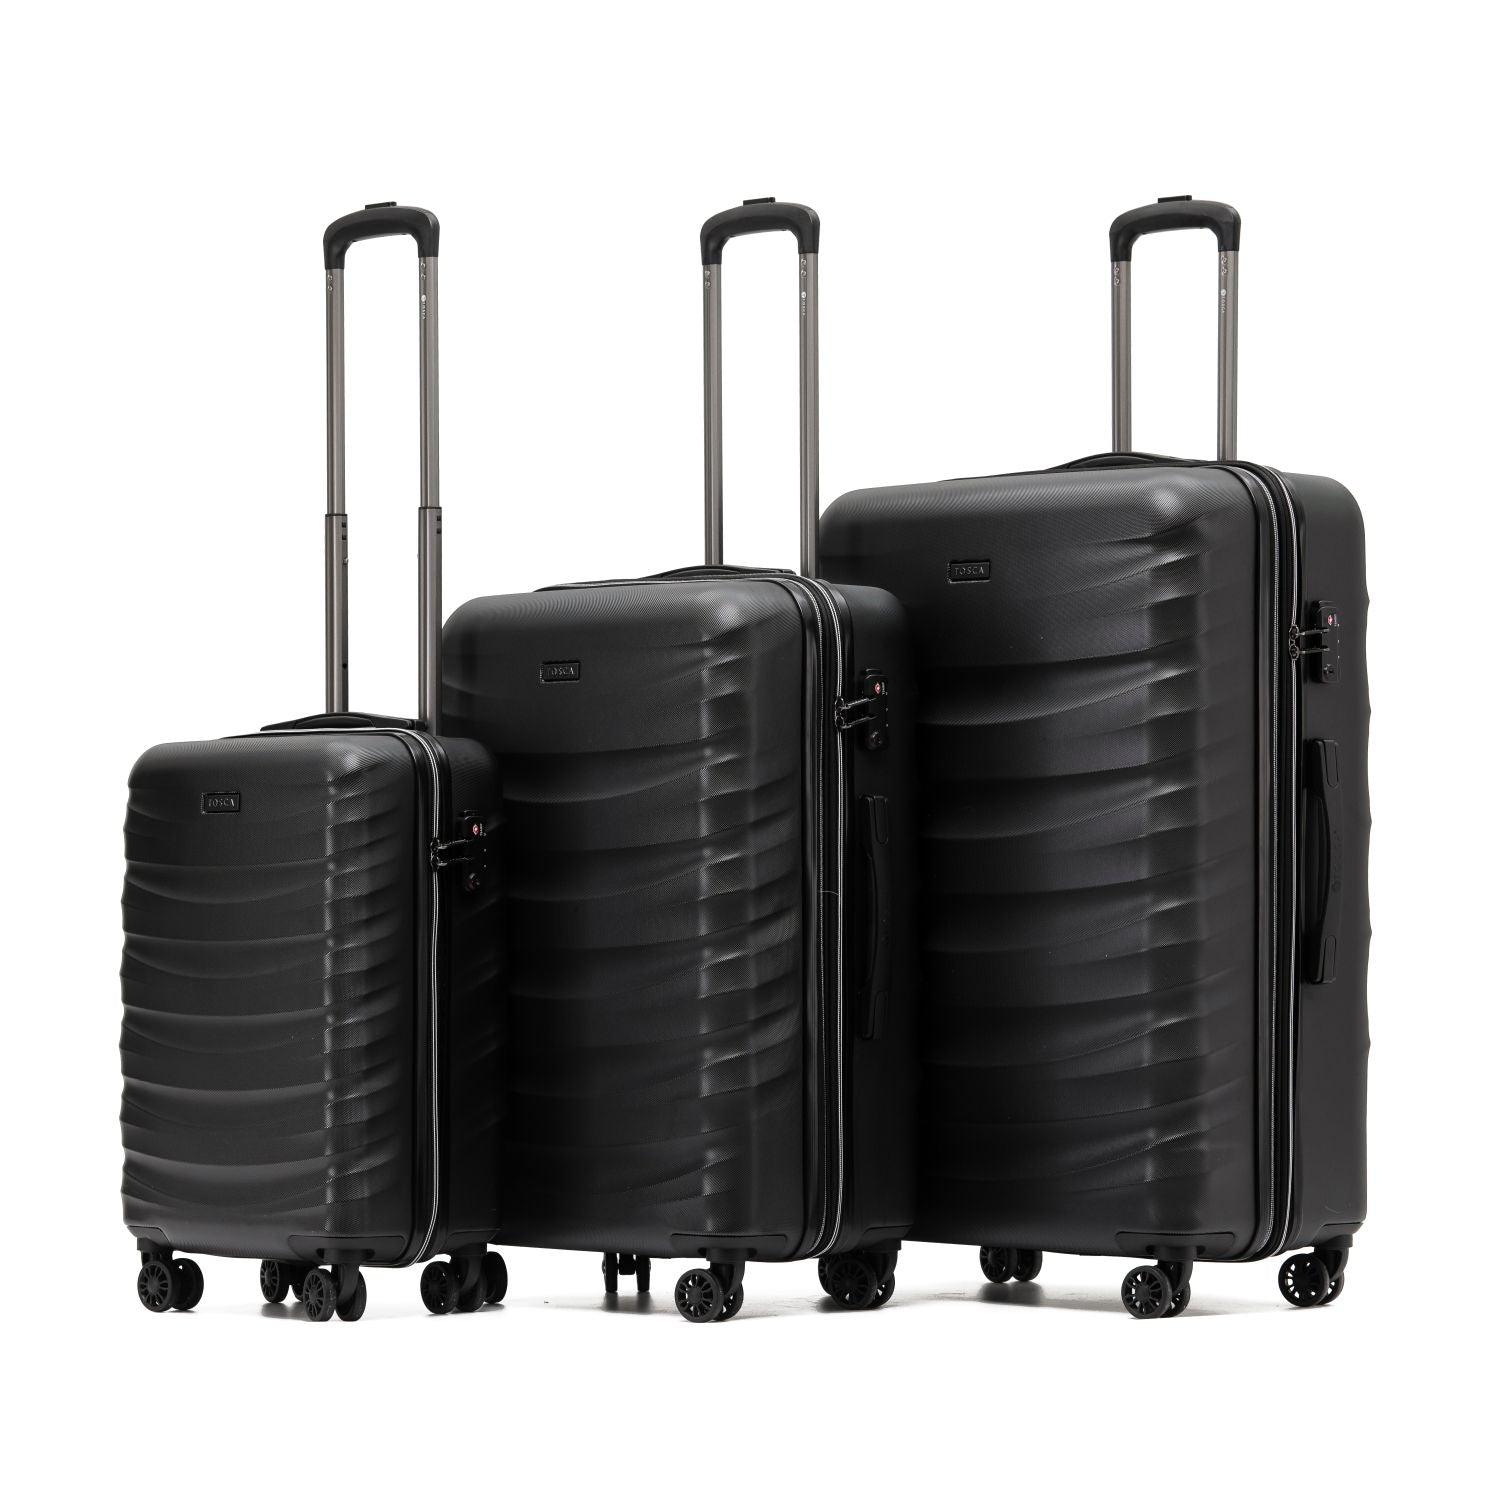 Tosca - Intersteller set of 3 suitcases - Black-1